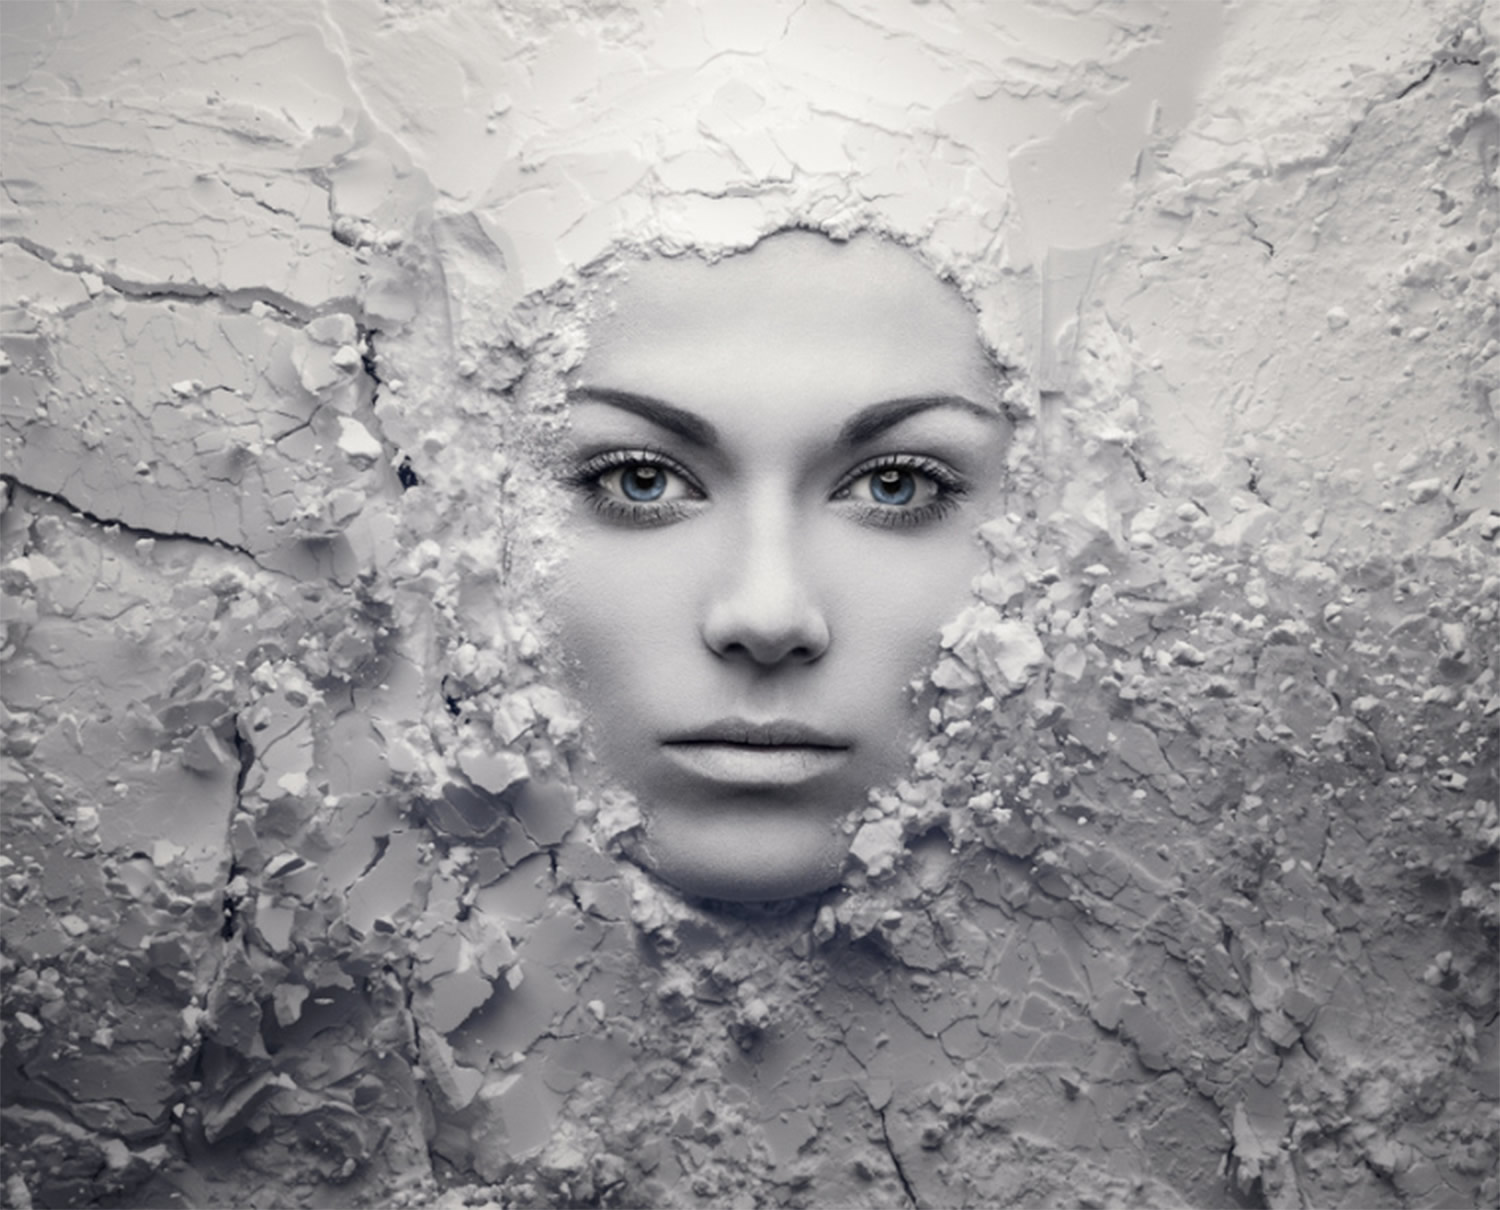 white powder on face, photography by evgeni kolesnik